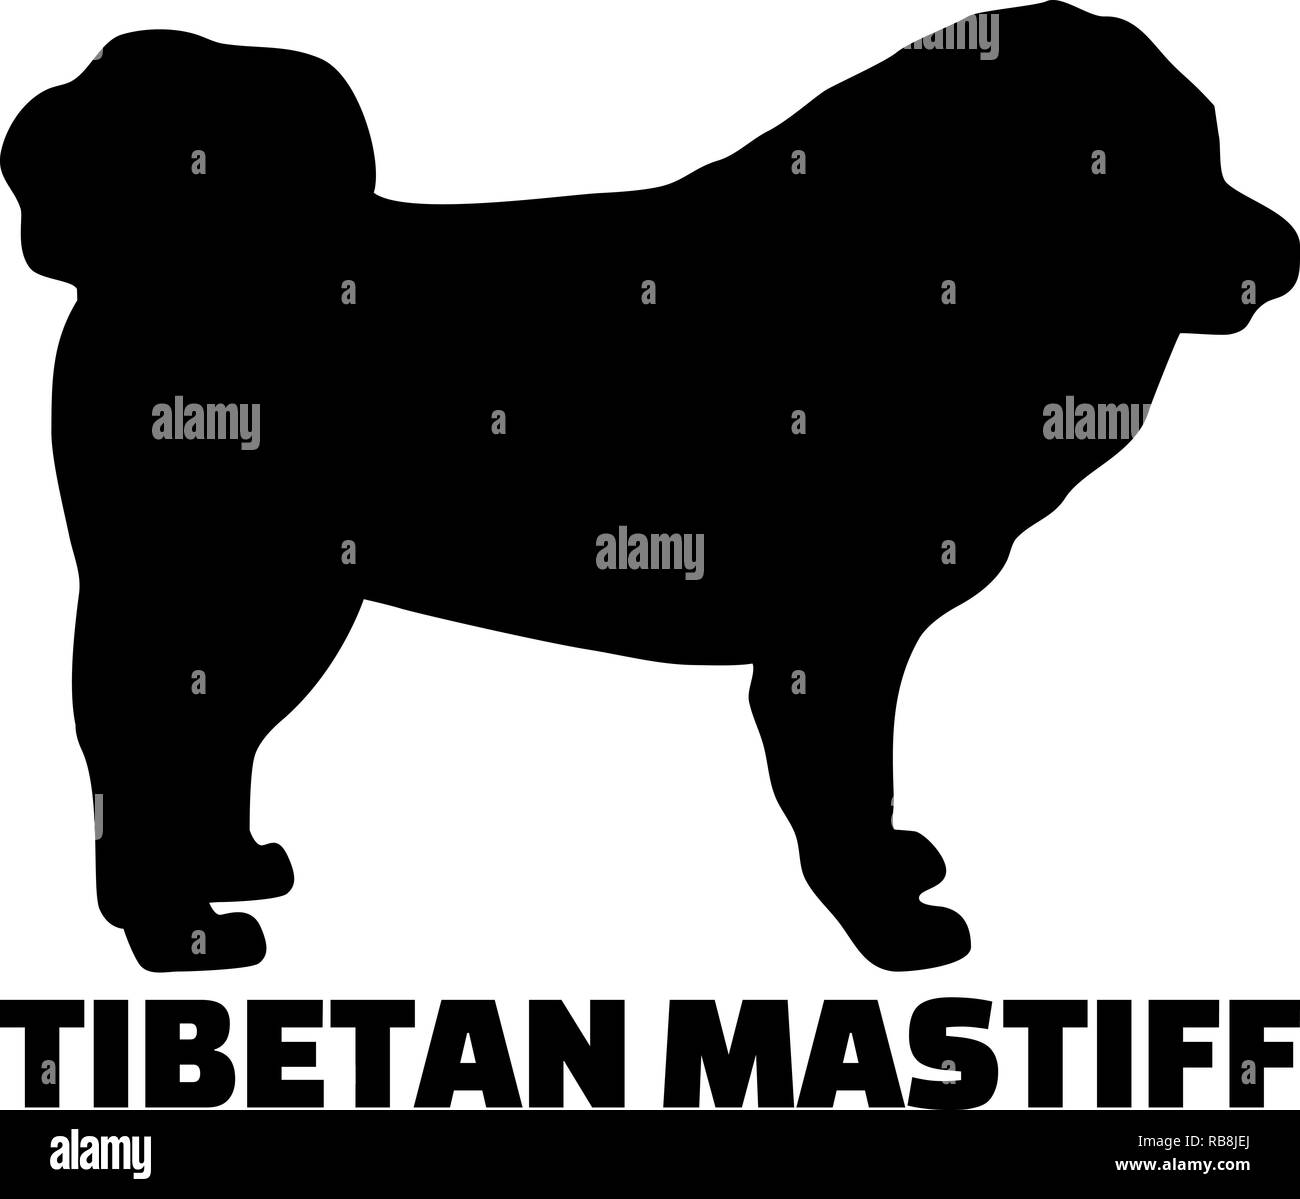 Tibetan Mastiff dog silhouette real with word Stock Photo